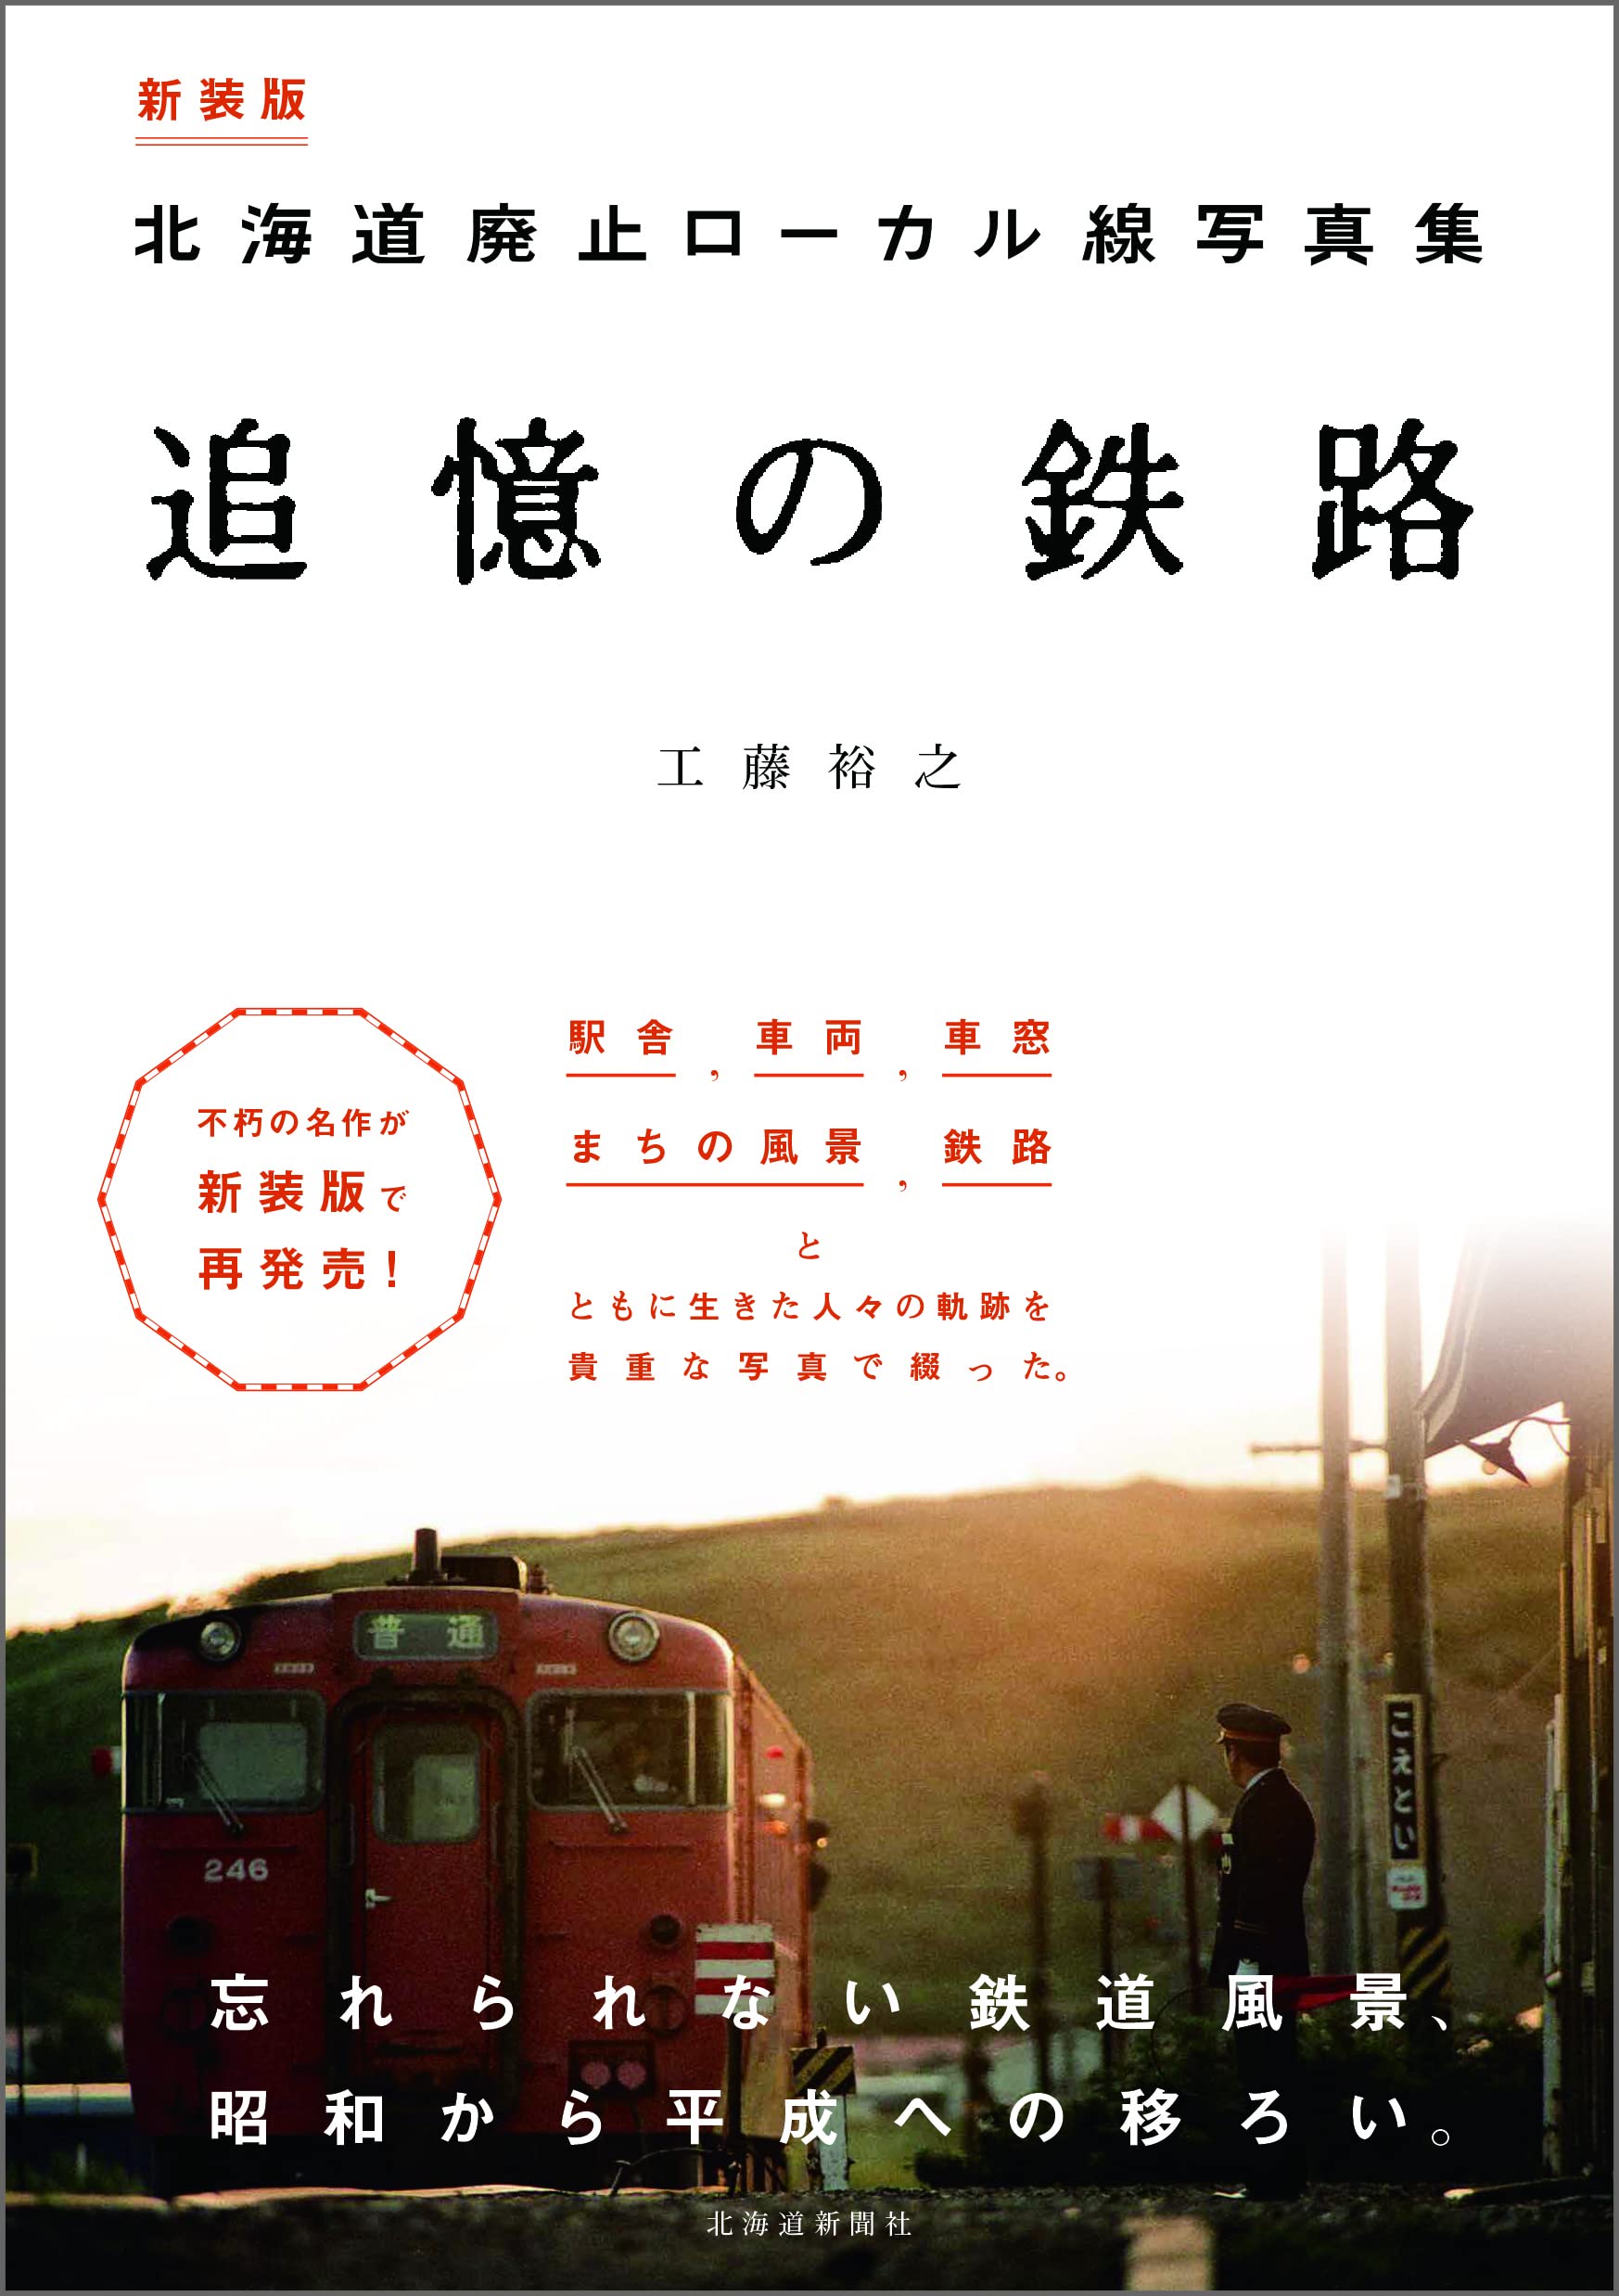 2 18新装版発売 北海道廃止ローカル線写真集 追憶の鉄路 Tsuioku Railway Twitter